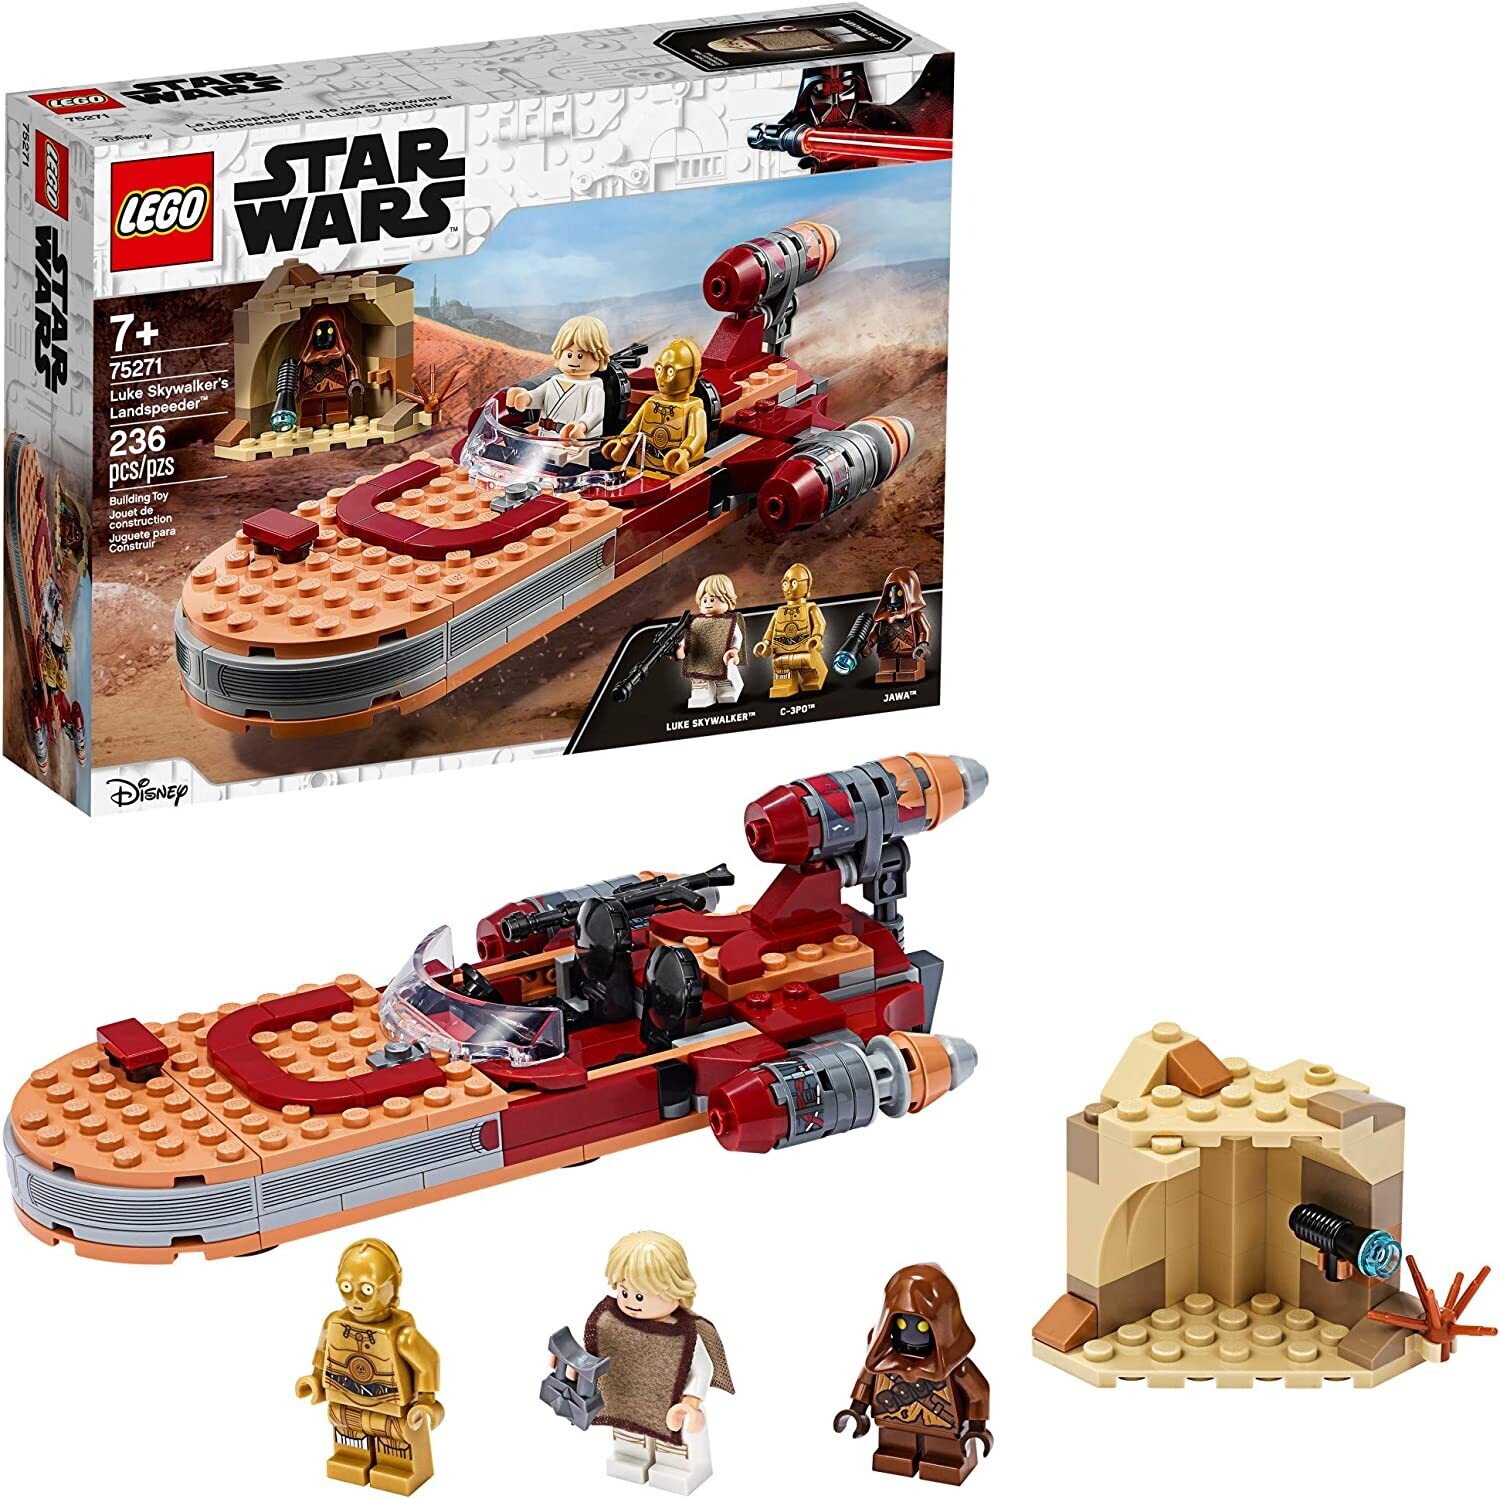 Lego 75271 Star Wars Luke Skywalker's Landspeeder